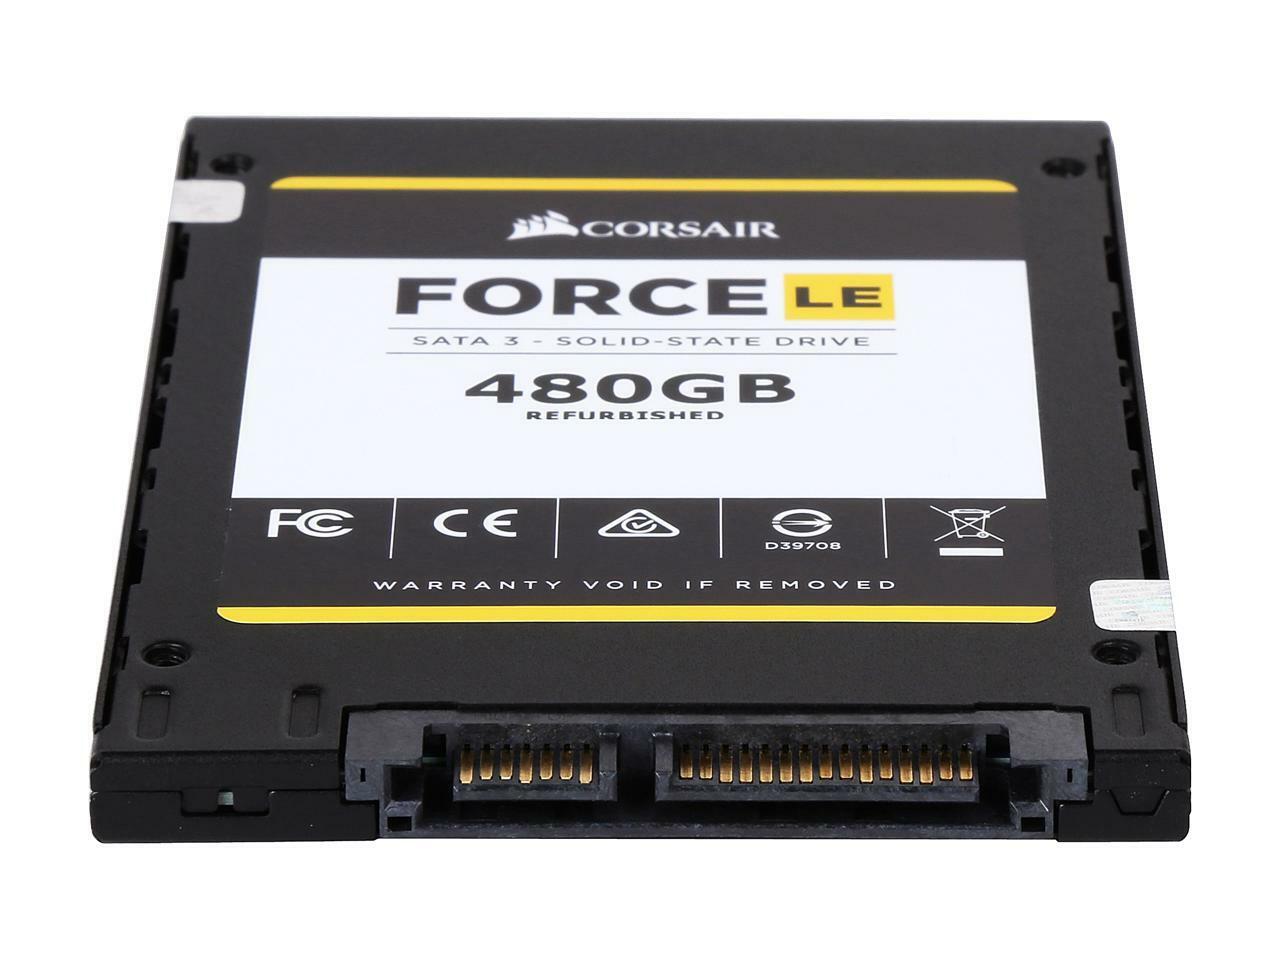 Corsair Force LE CSSD-F480GBLEB/RF2 2.5" SSD 480GB / Repack/Refurb